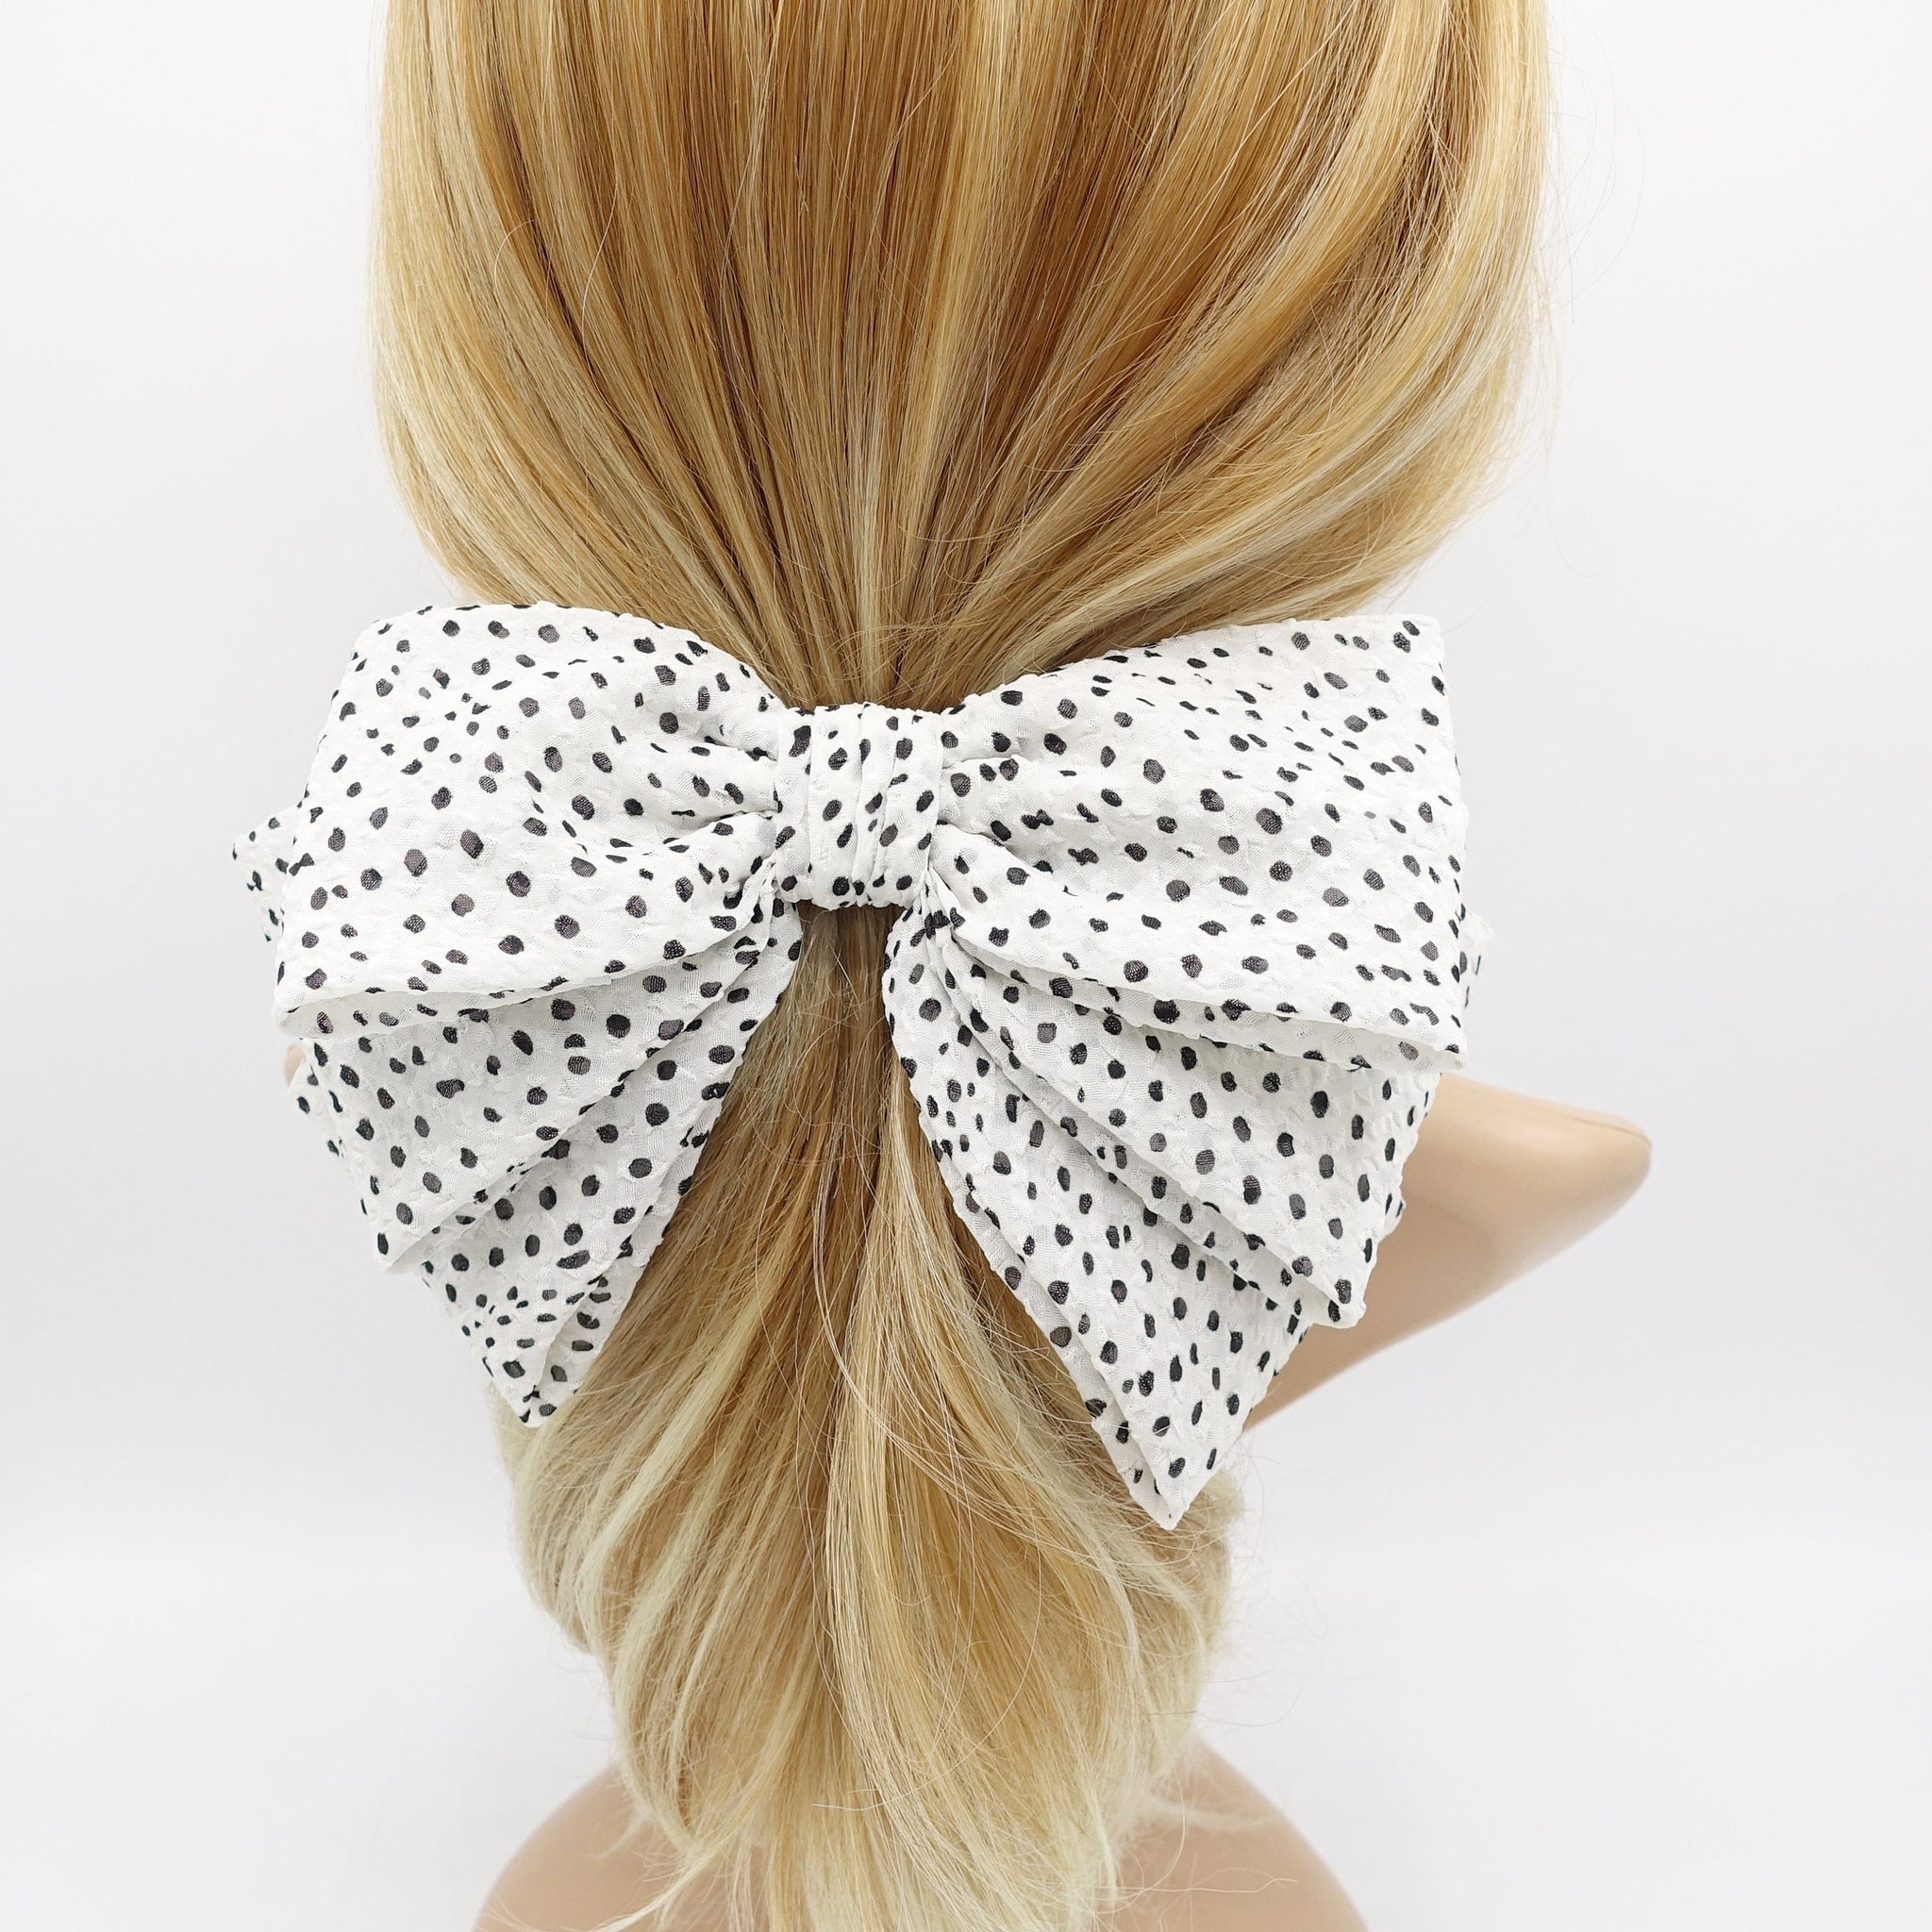 veryshine.com Barrette (Bow) Cream white Spring Summer hair bow, dot hair bow, crepe hair bow for women